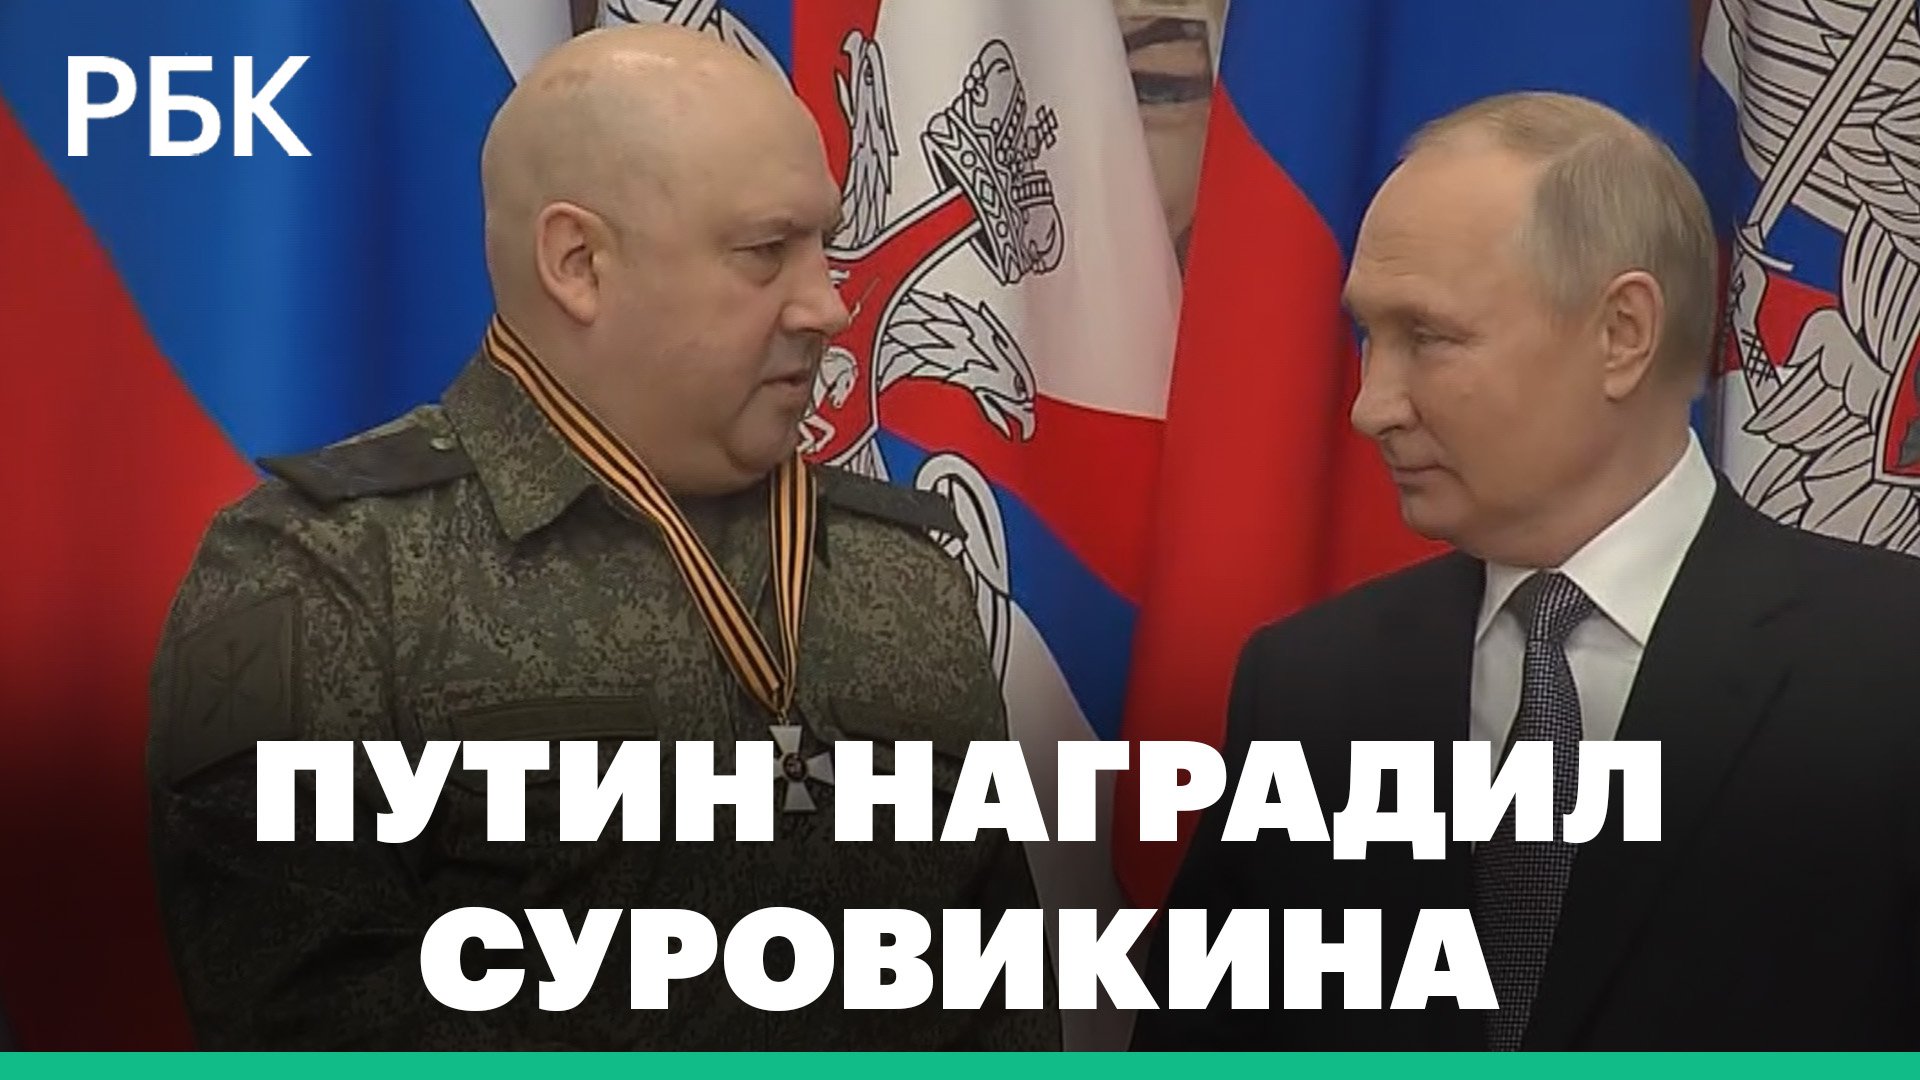 Путин наградил Суровикина орденом Святого Георгия